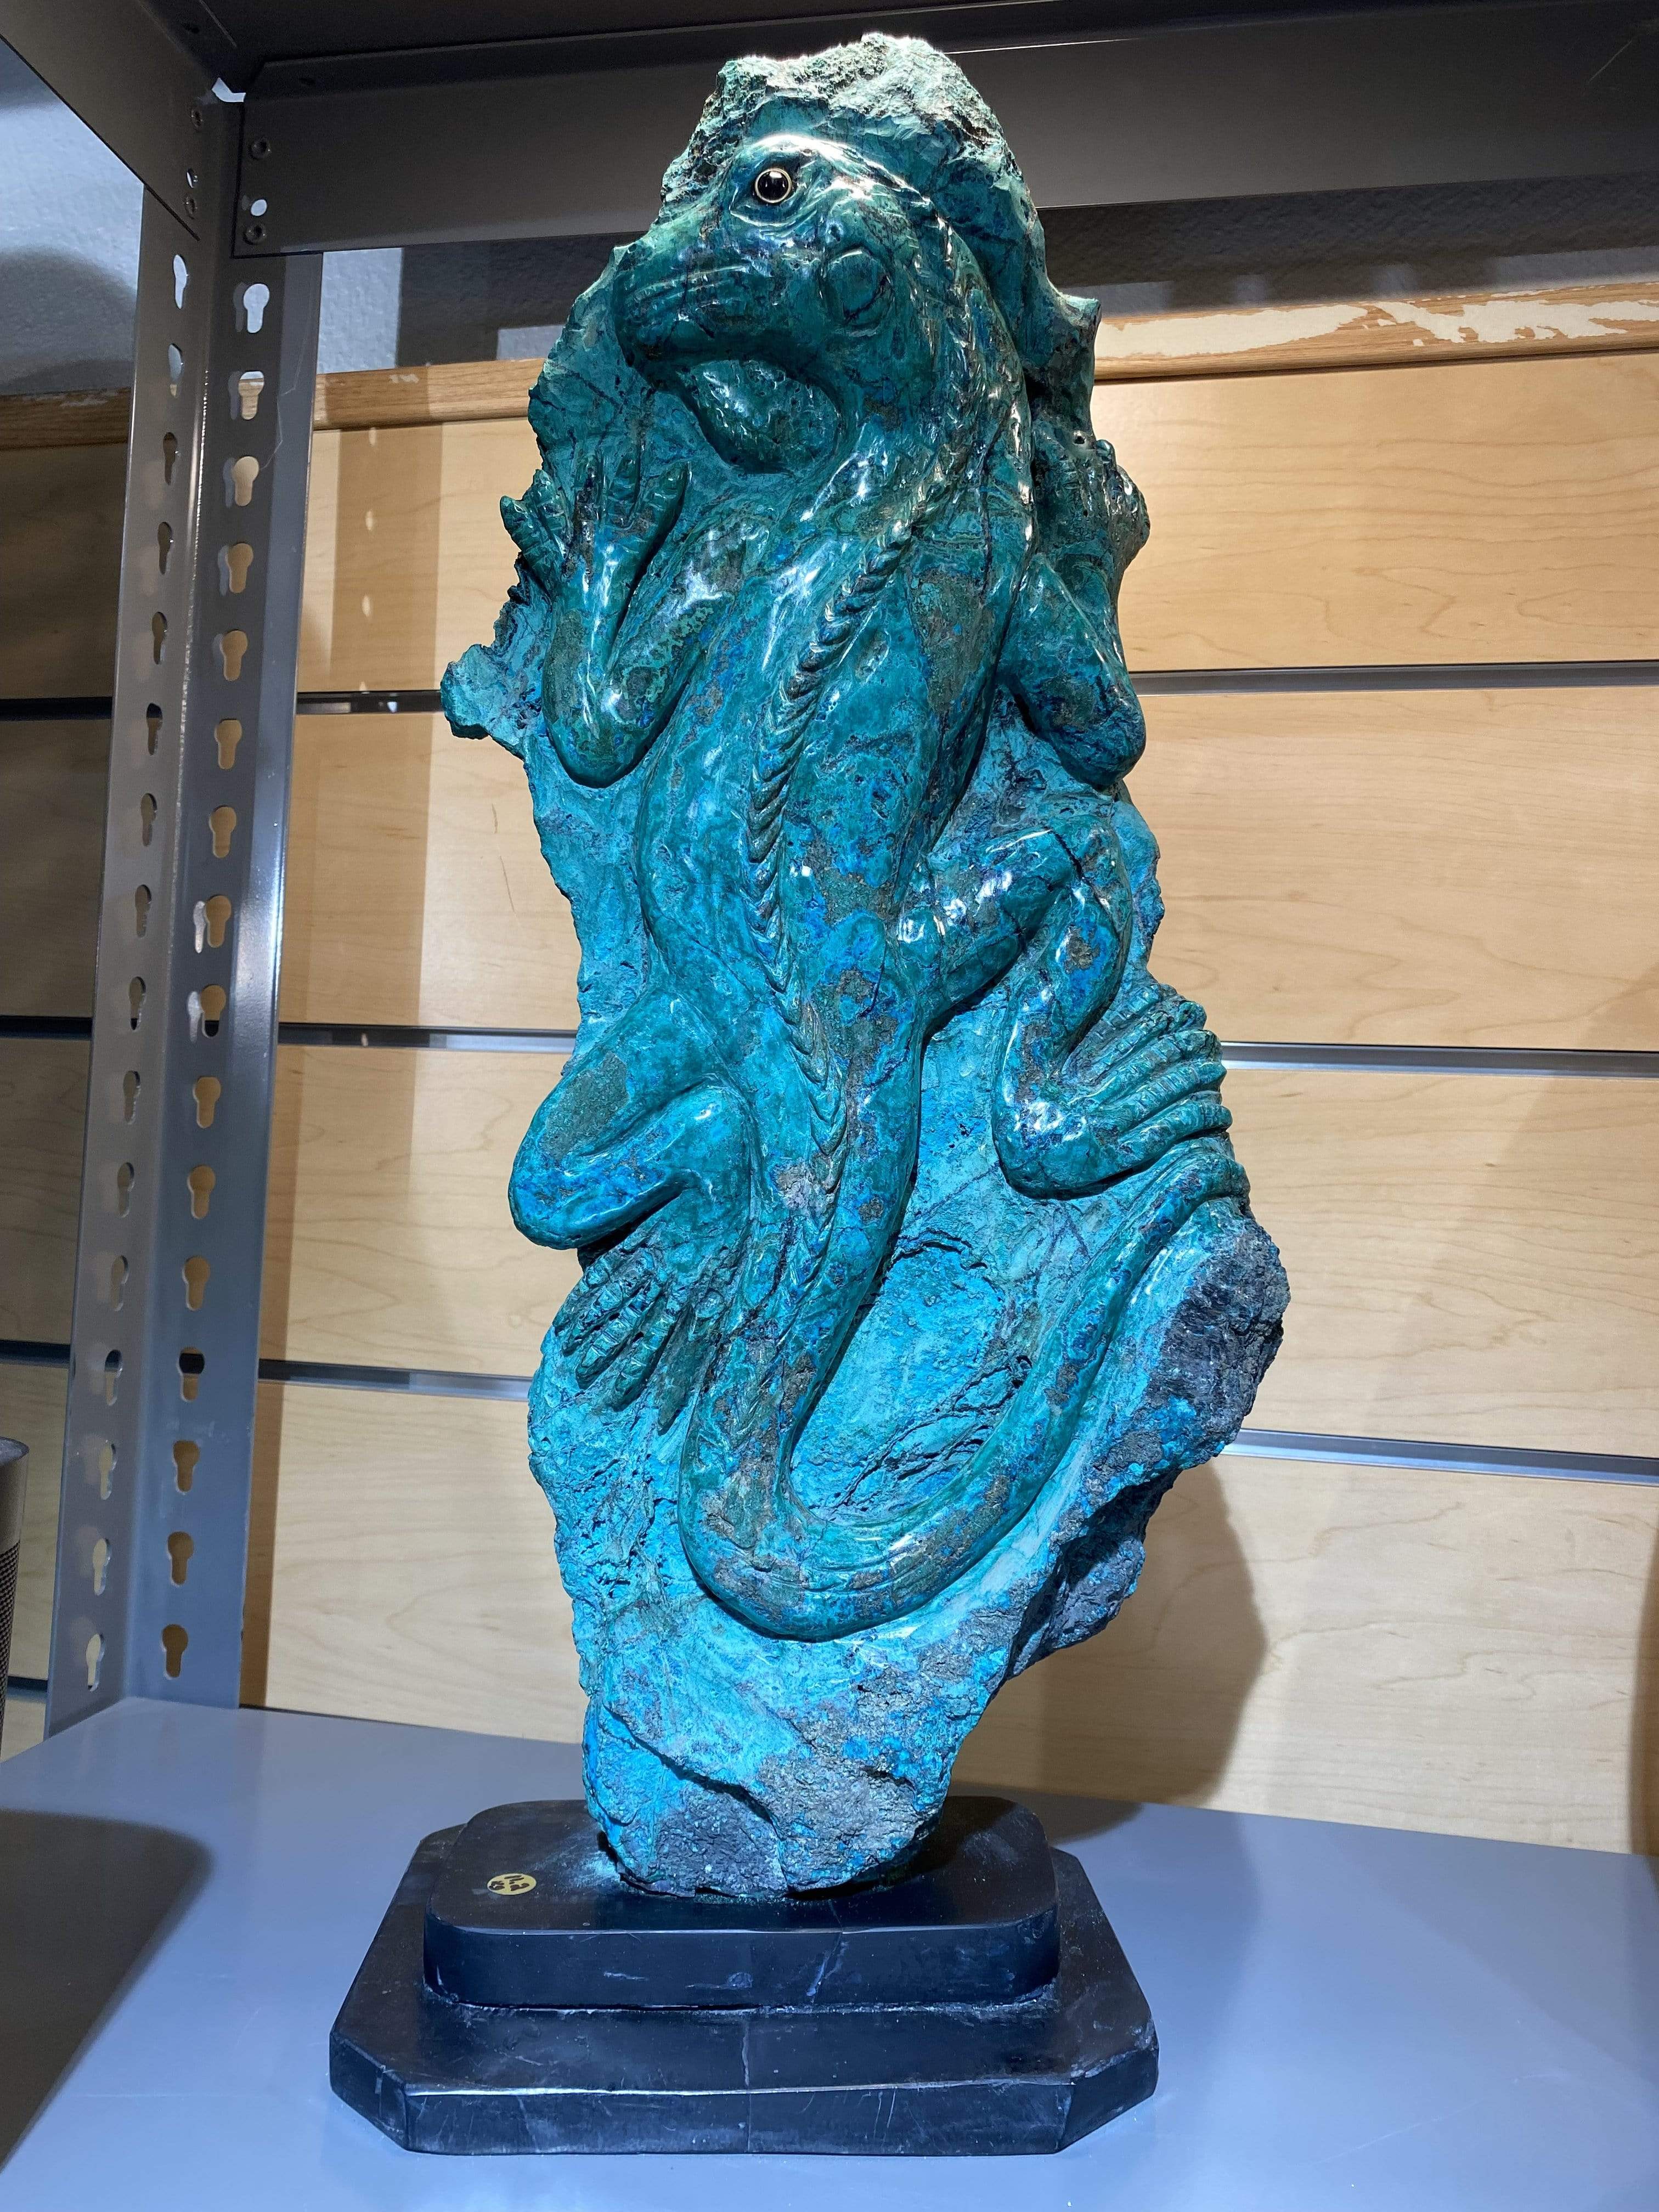 Kalifano Gemstone Carvings Natural Blue Chrysocolla Carving from Congo - 20" / 24 lbs CV24000.001